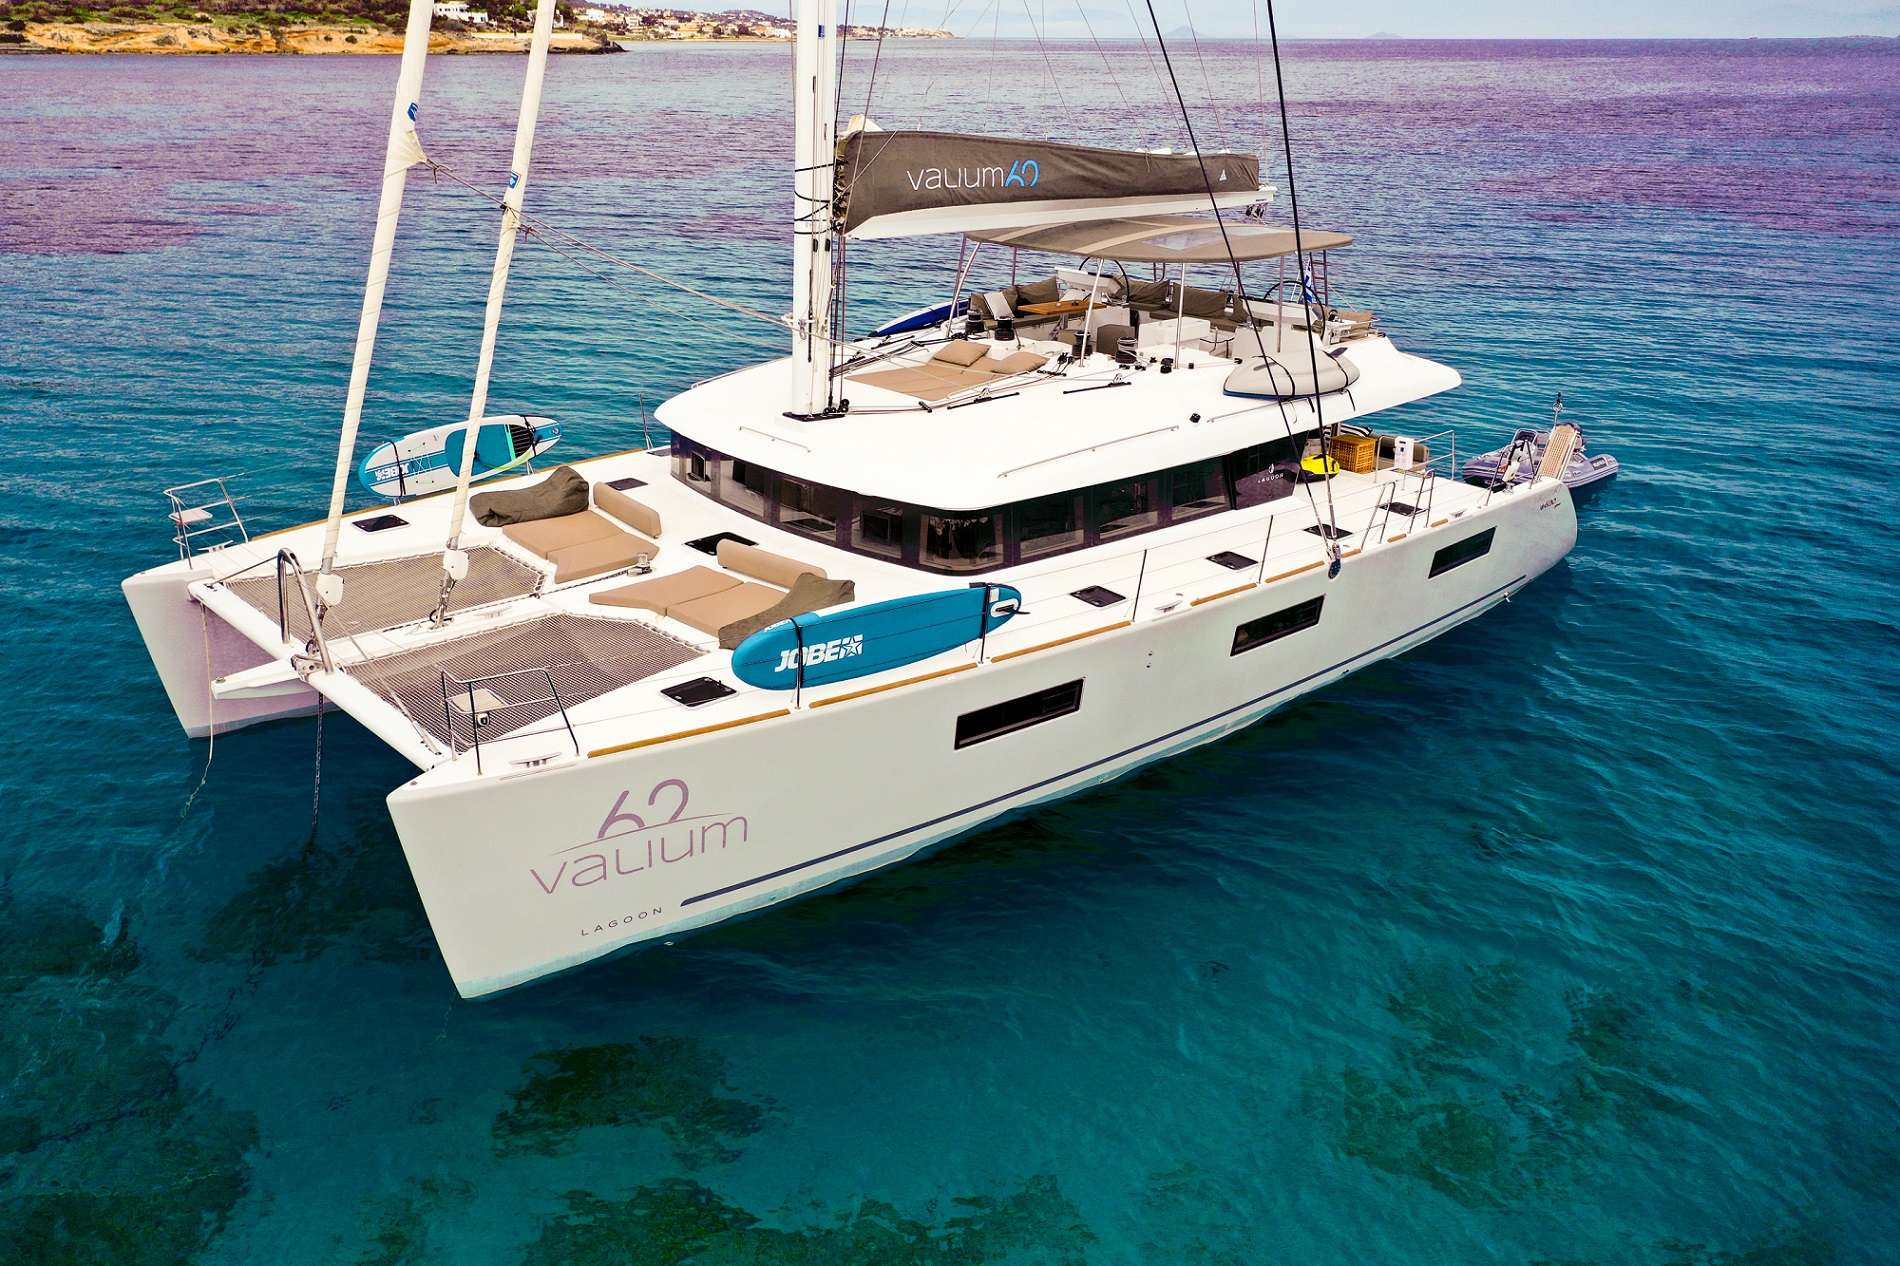 valium62 - Luxury yacht charter worldwide & Boat hire in Greece 2